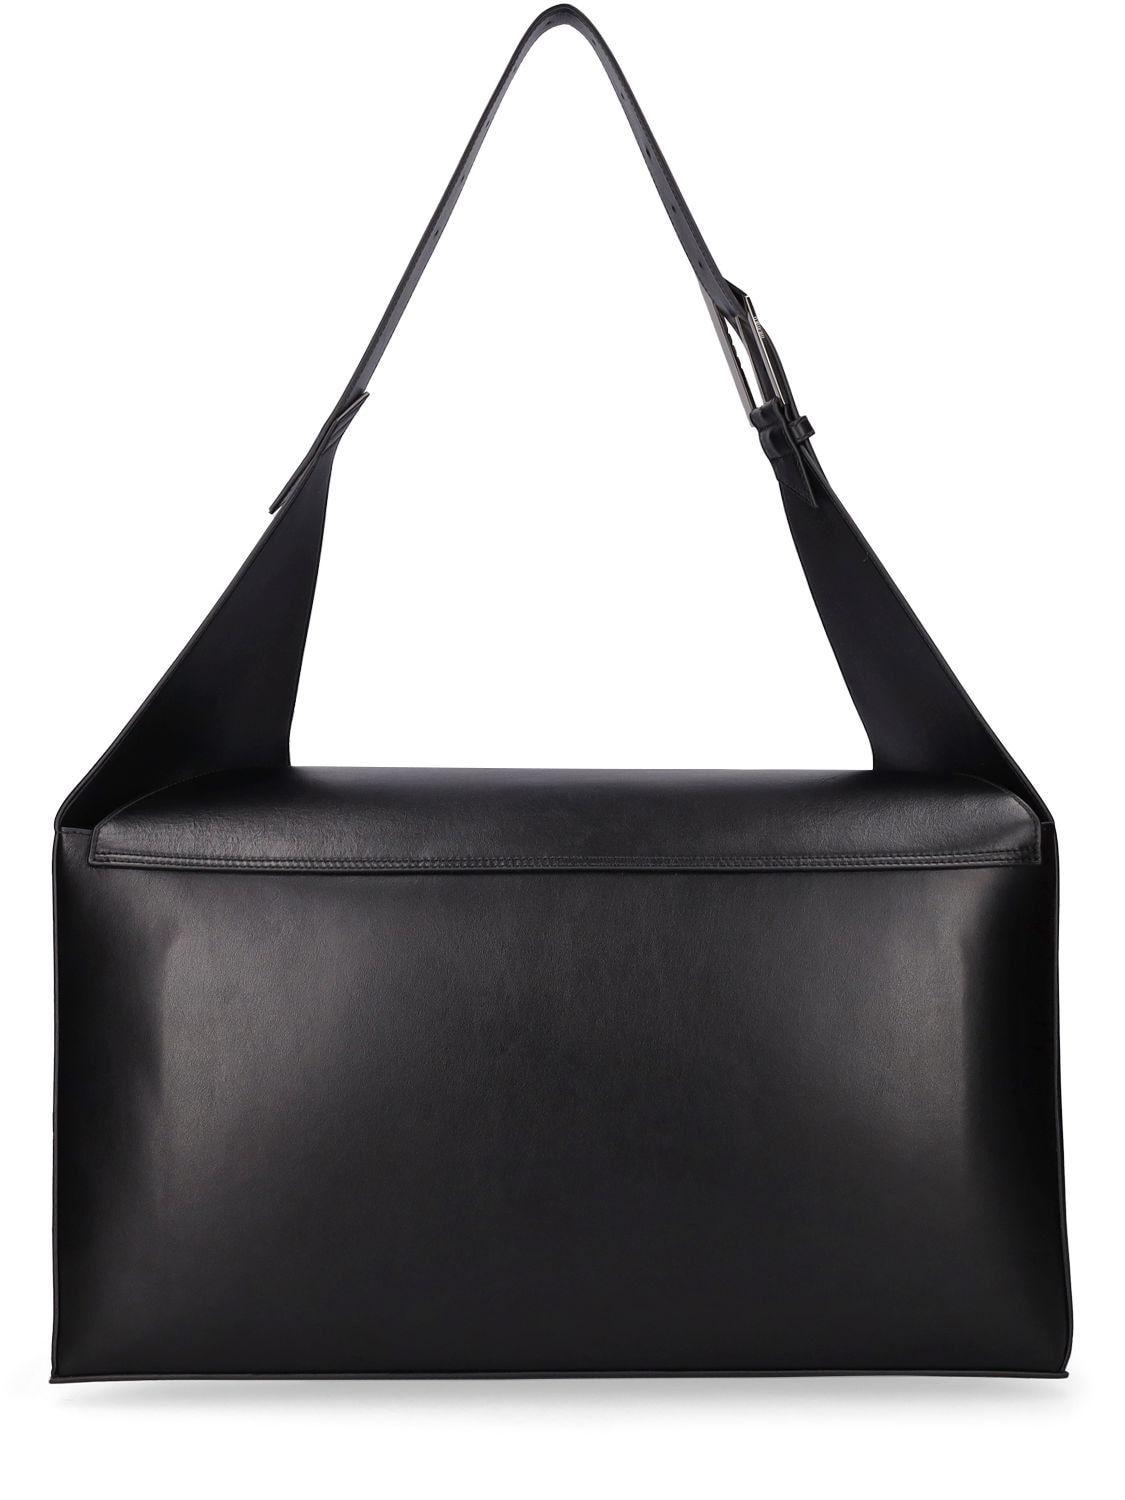 12 PM Large Leather Shoulder Bag in Black - The Attico